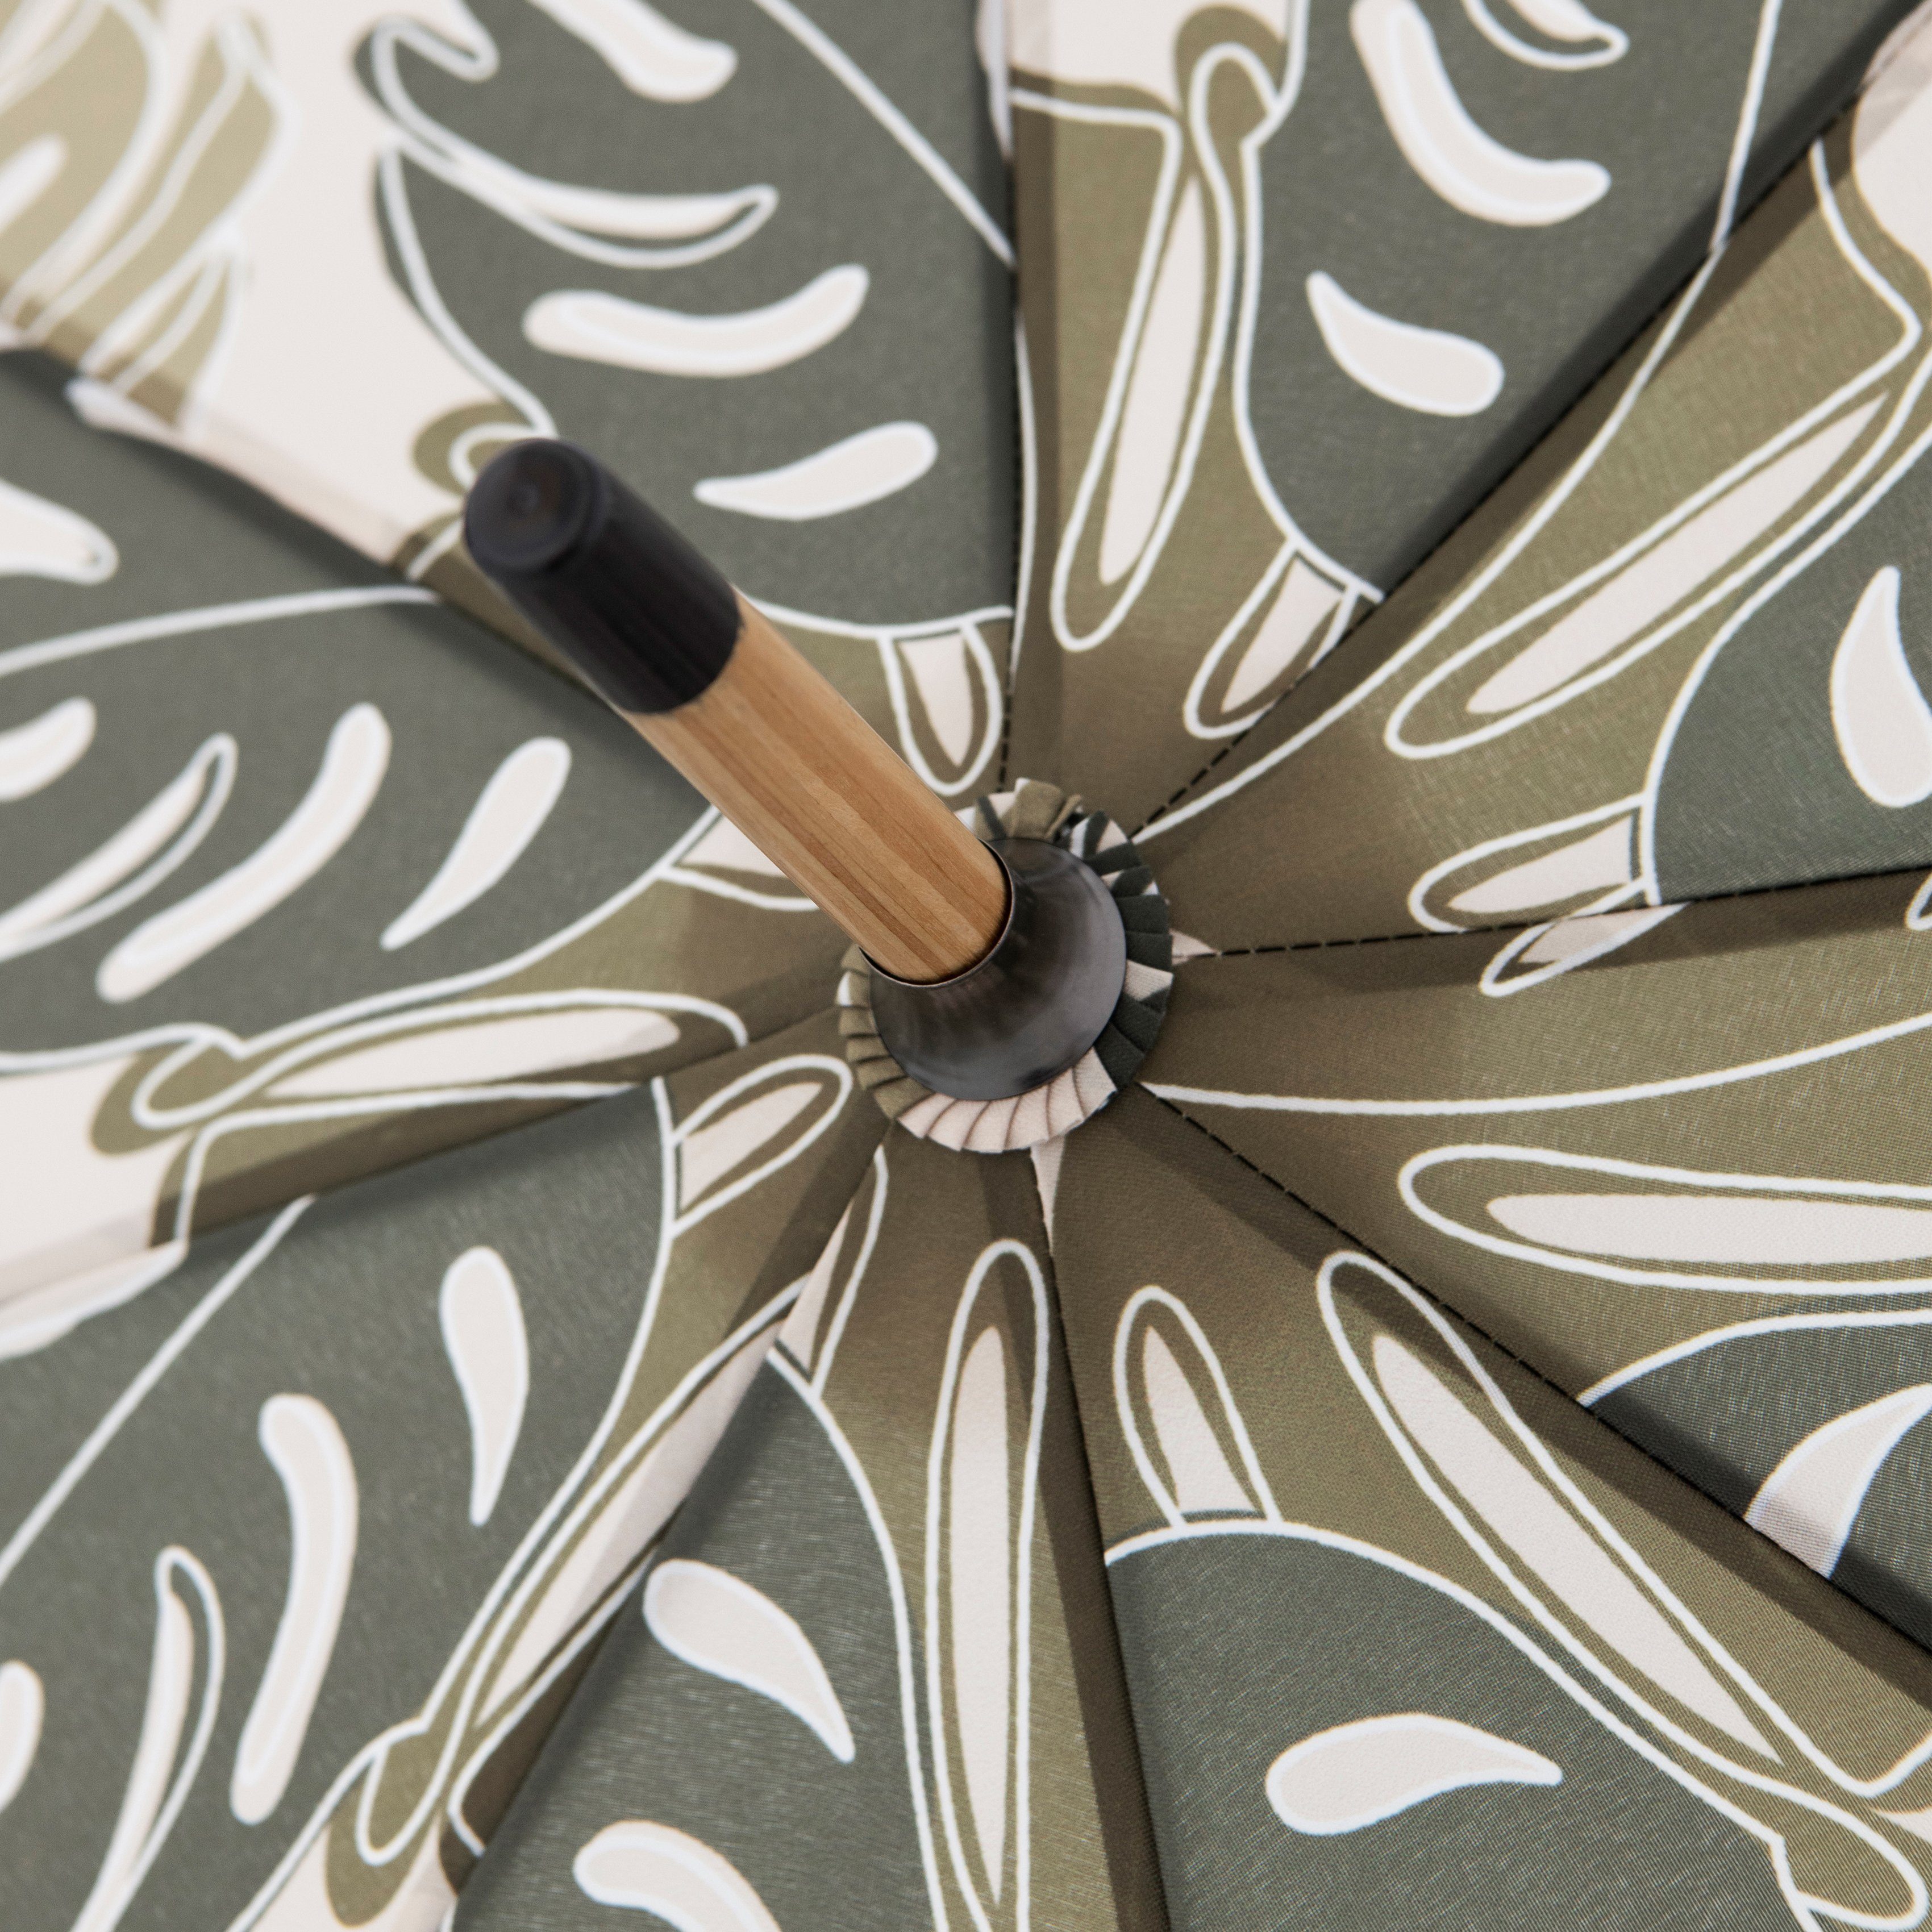 Long, doppler® choice beige, Schirmgriff recyceltem Material nature Stockregenschirm aus Holz mit aus